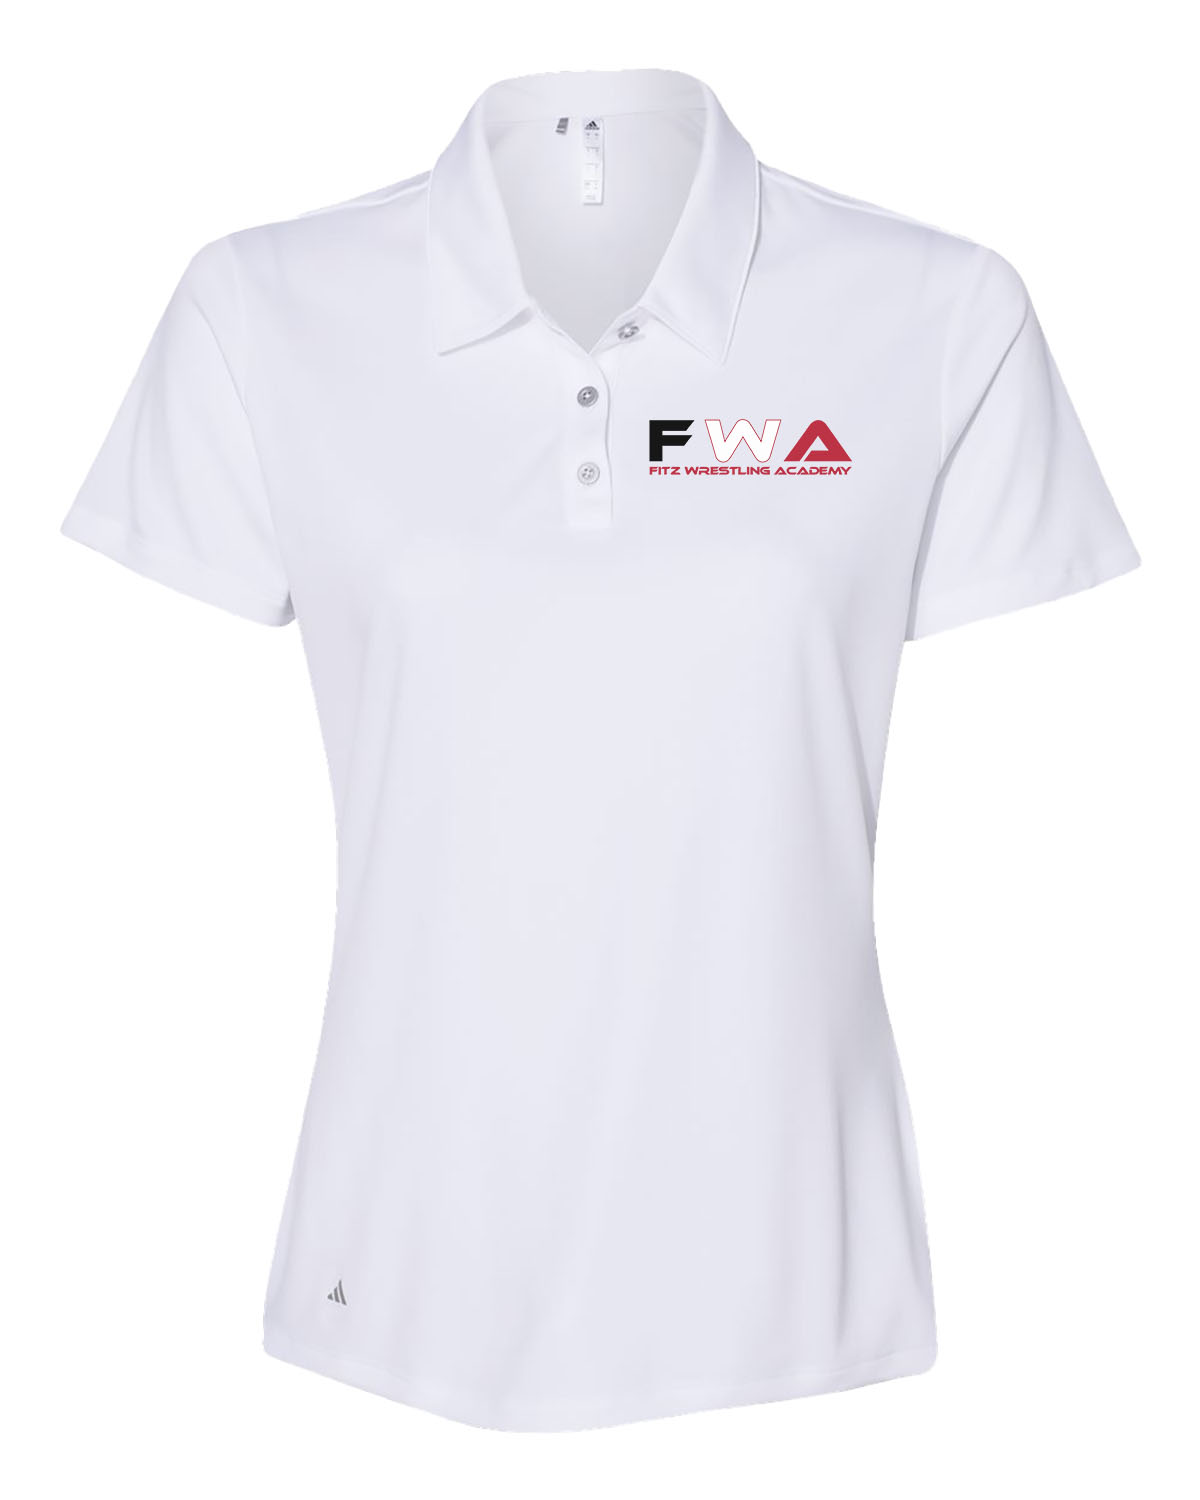 Fitz Wrestling Academy // Women's Polo - Adidas